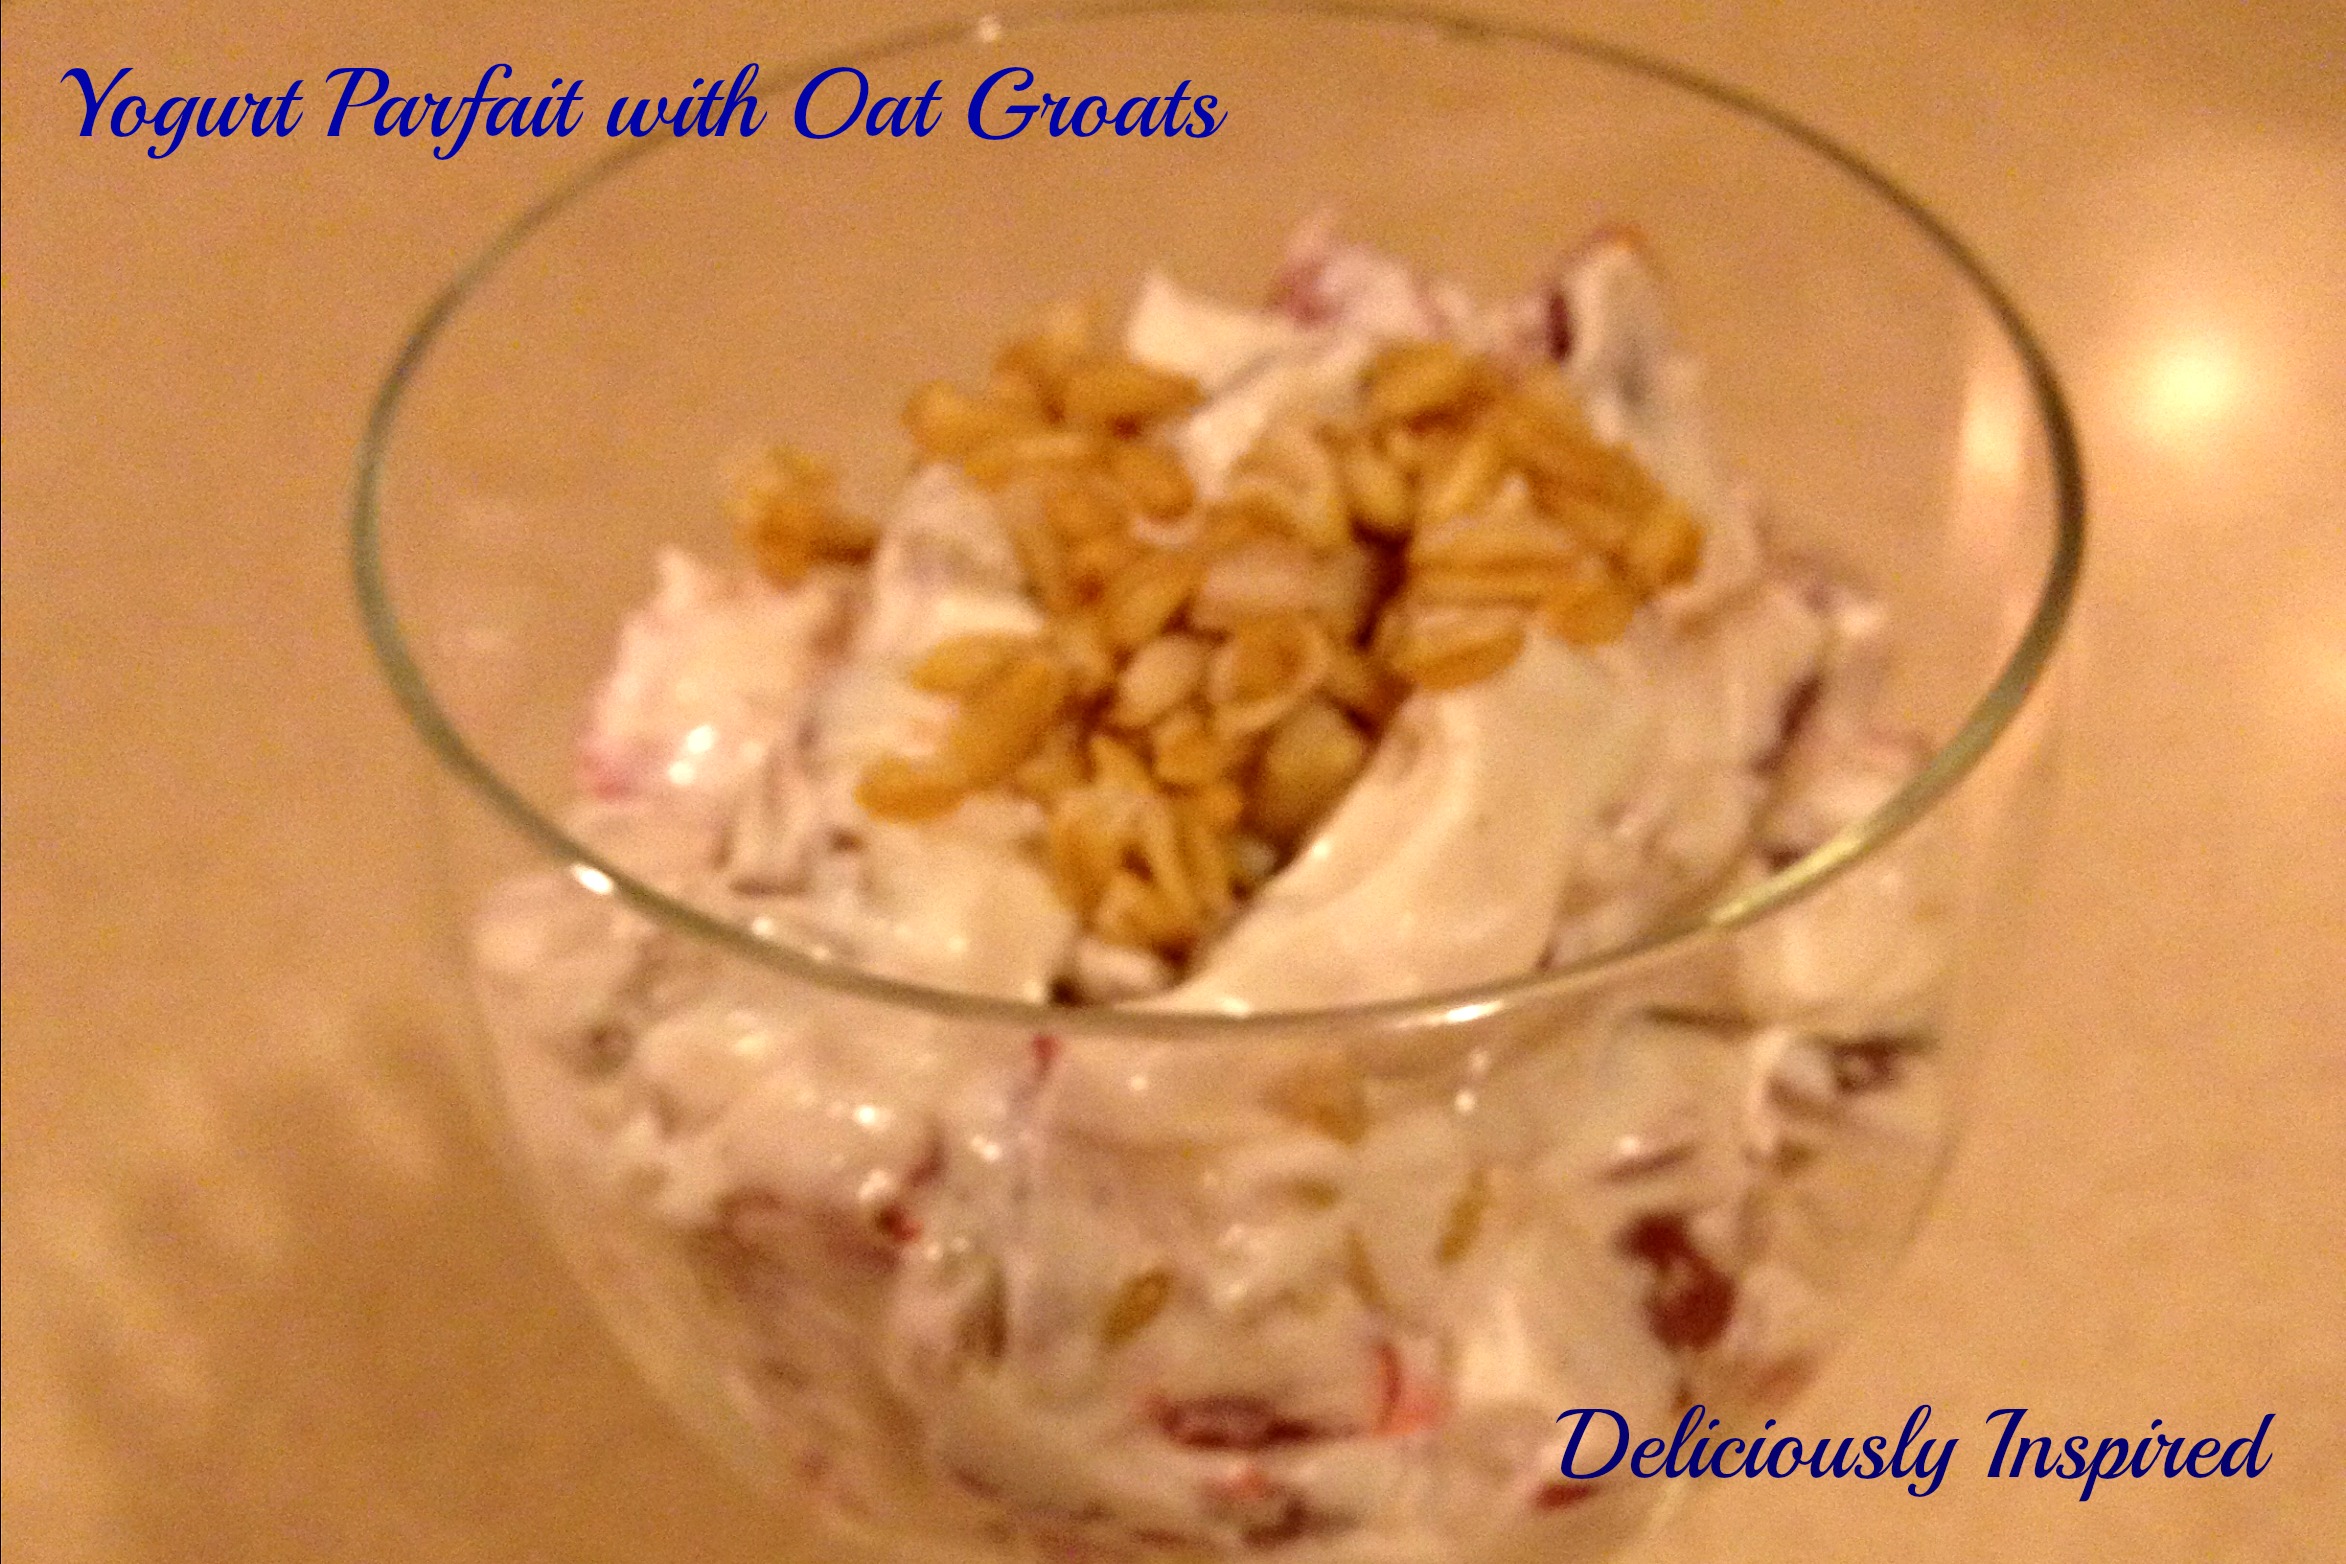 Yogurt Parfait with Oat Groats